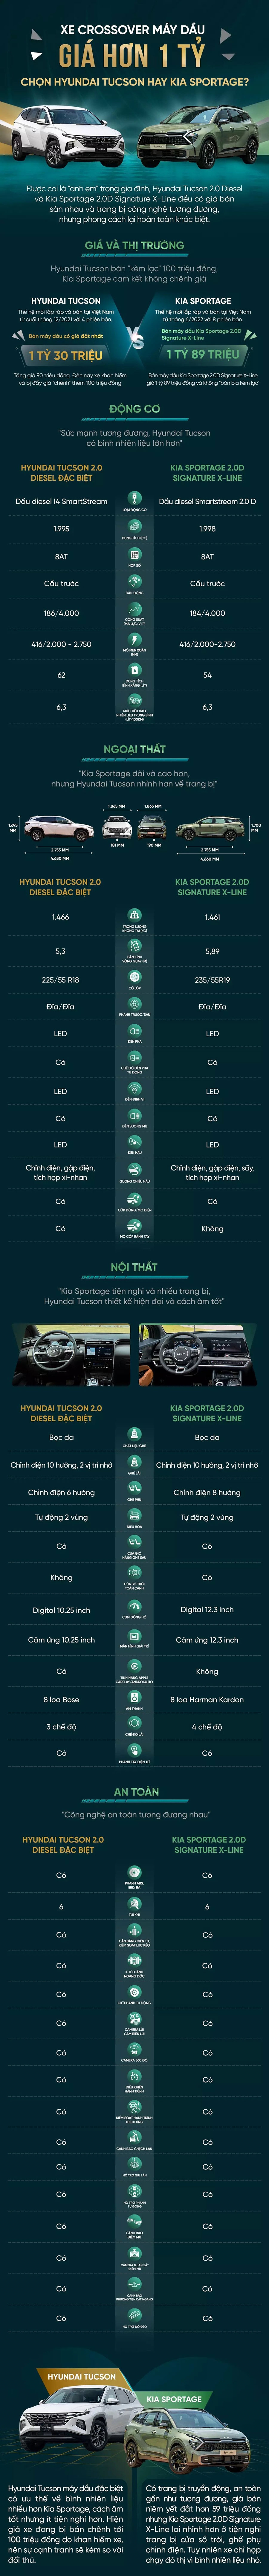 Crossover máy dầu giá hơn 1 tỷ: Chọn Hyundai Tucson hay Kia Sportage?